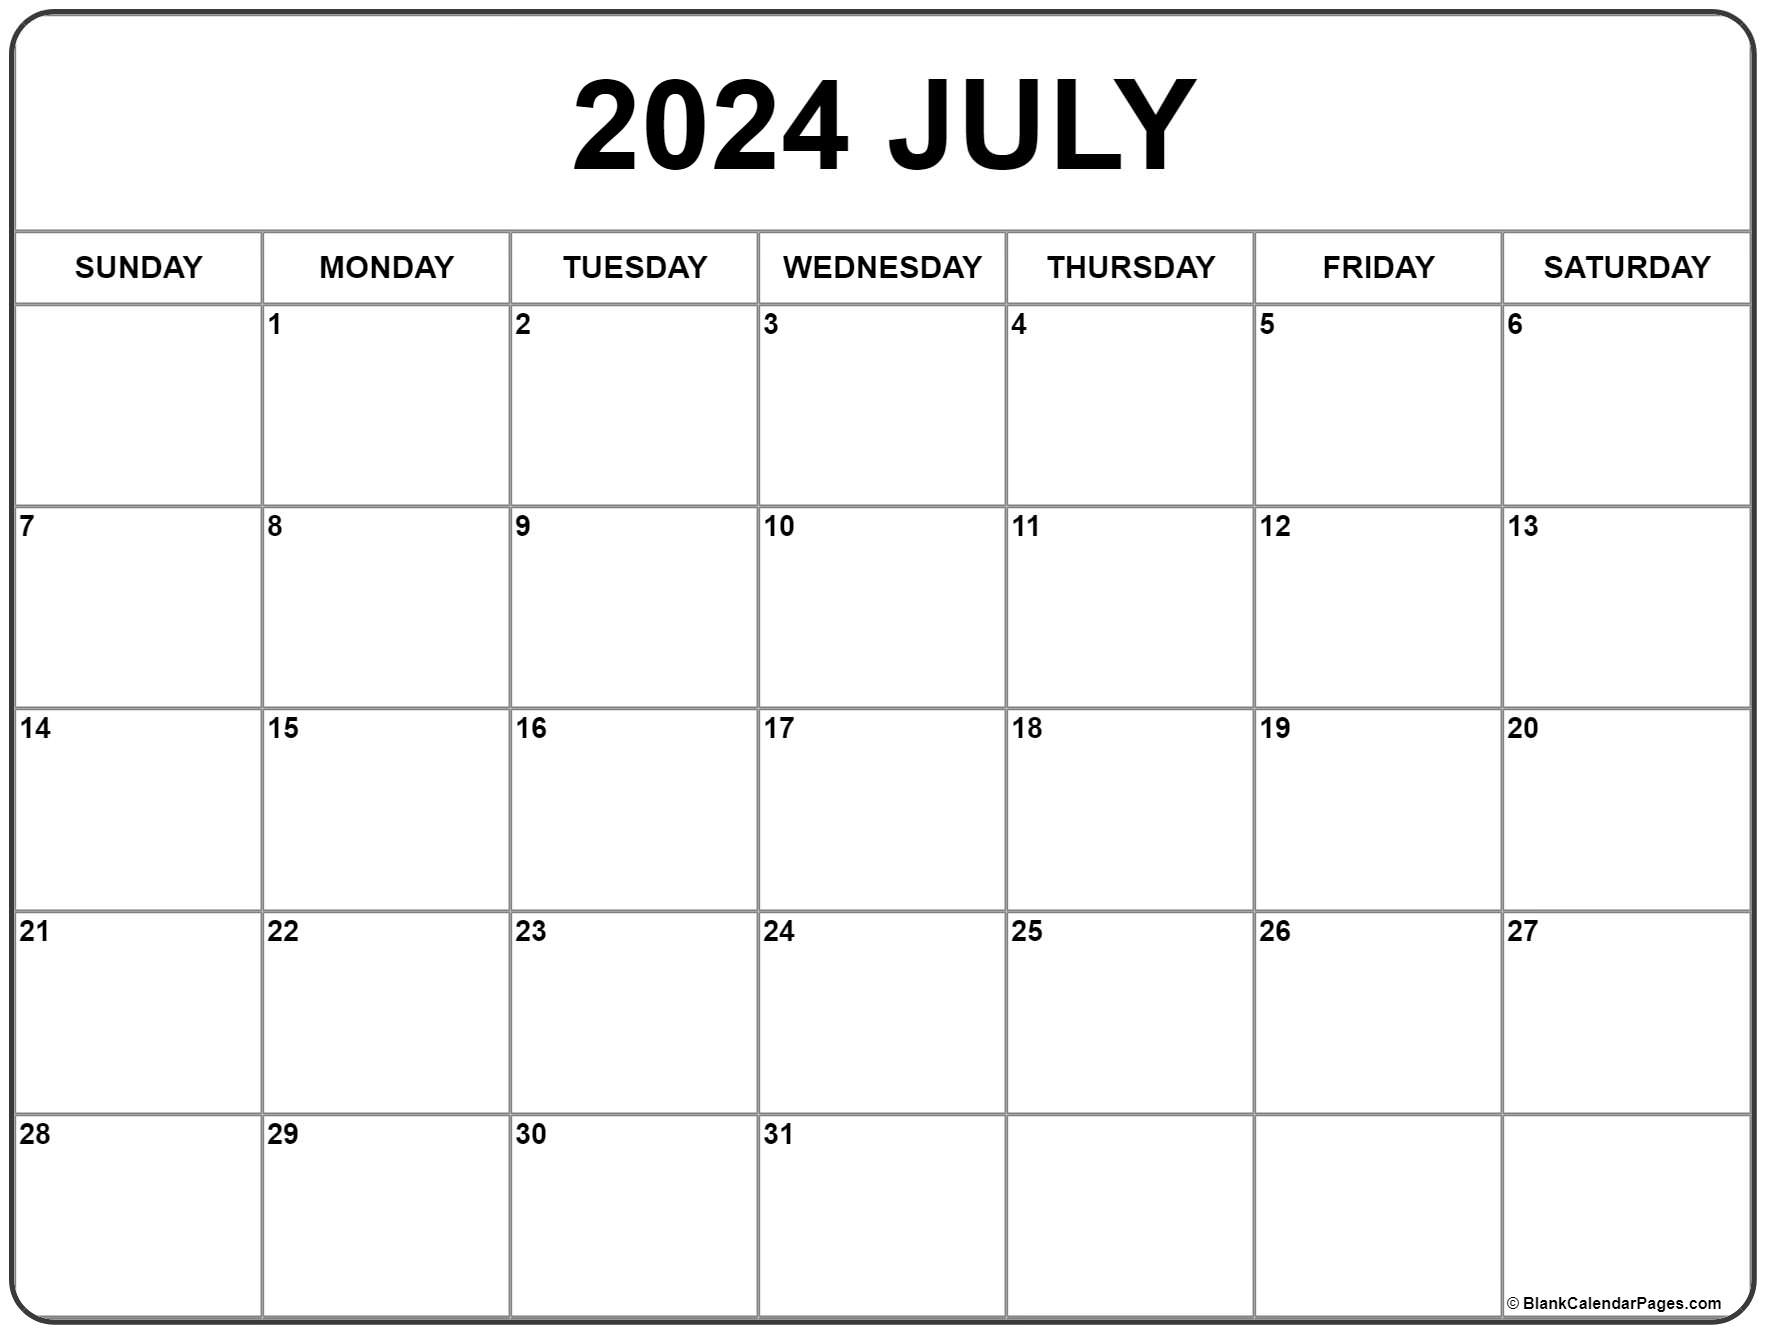 July 2024 Calendar | Free Printable Calendar in Calendar 2024 July Month